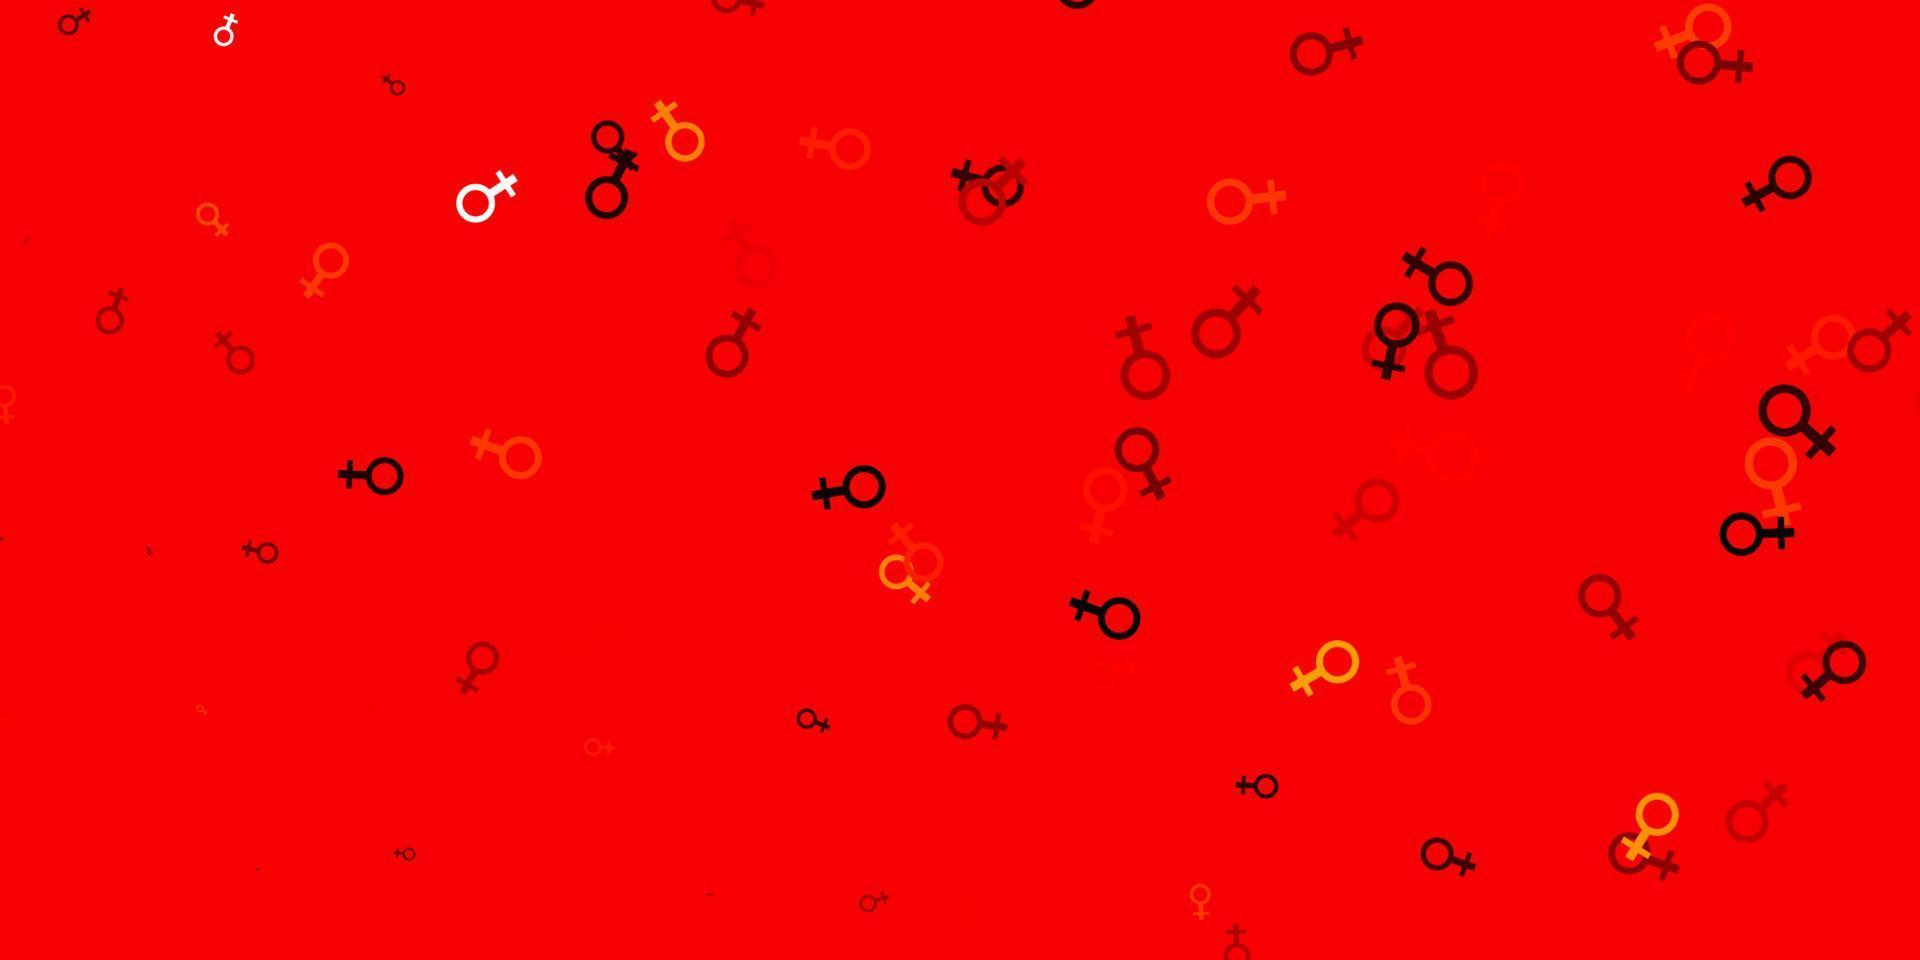 Light Orange vector background with woman symbols.